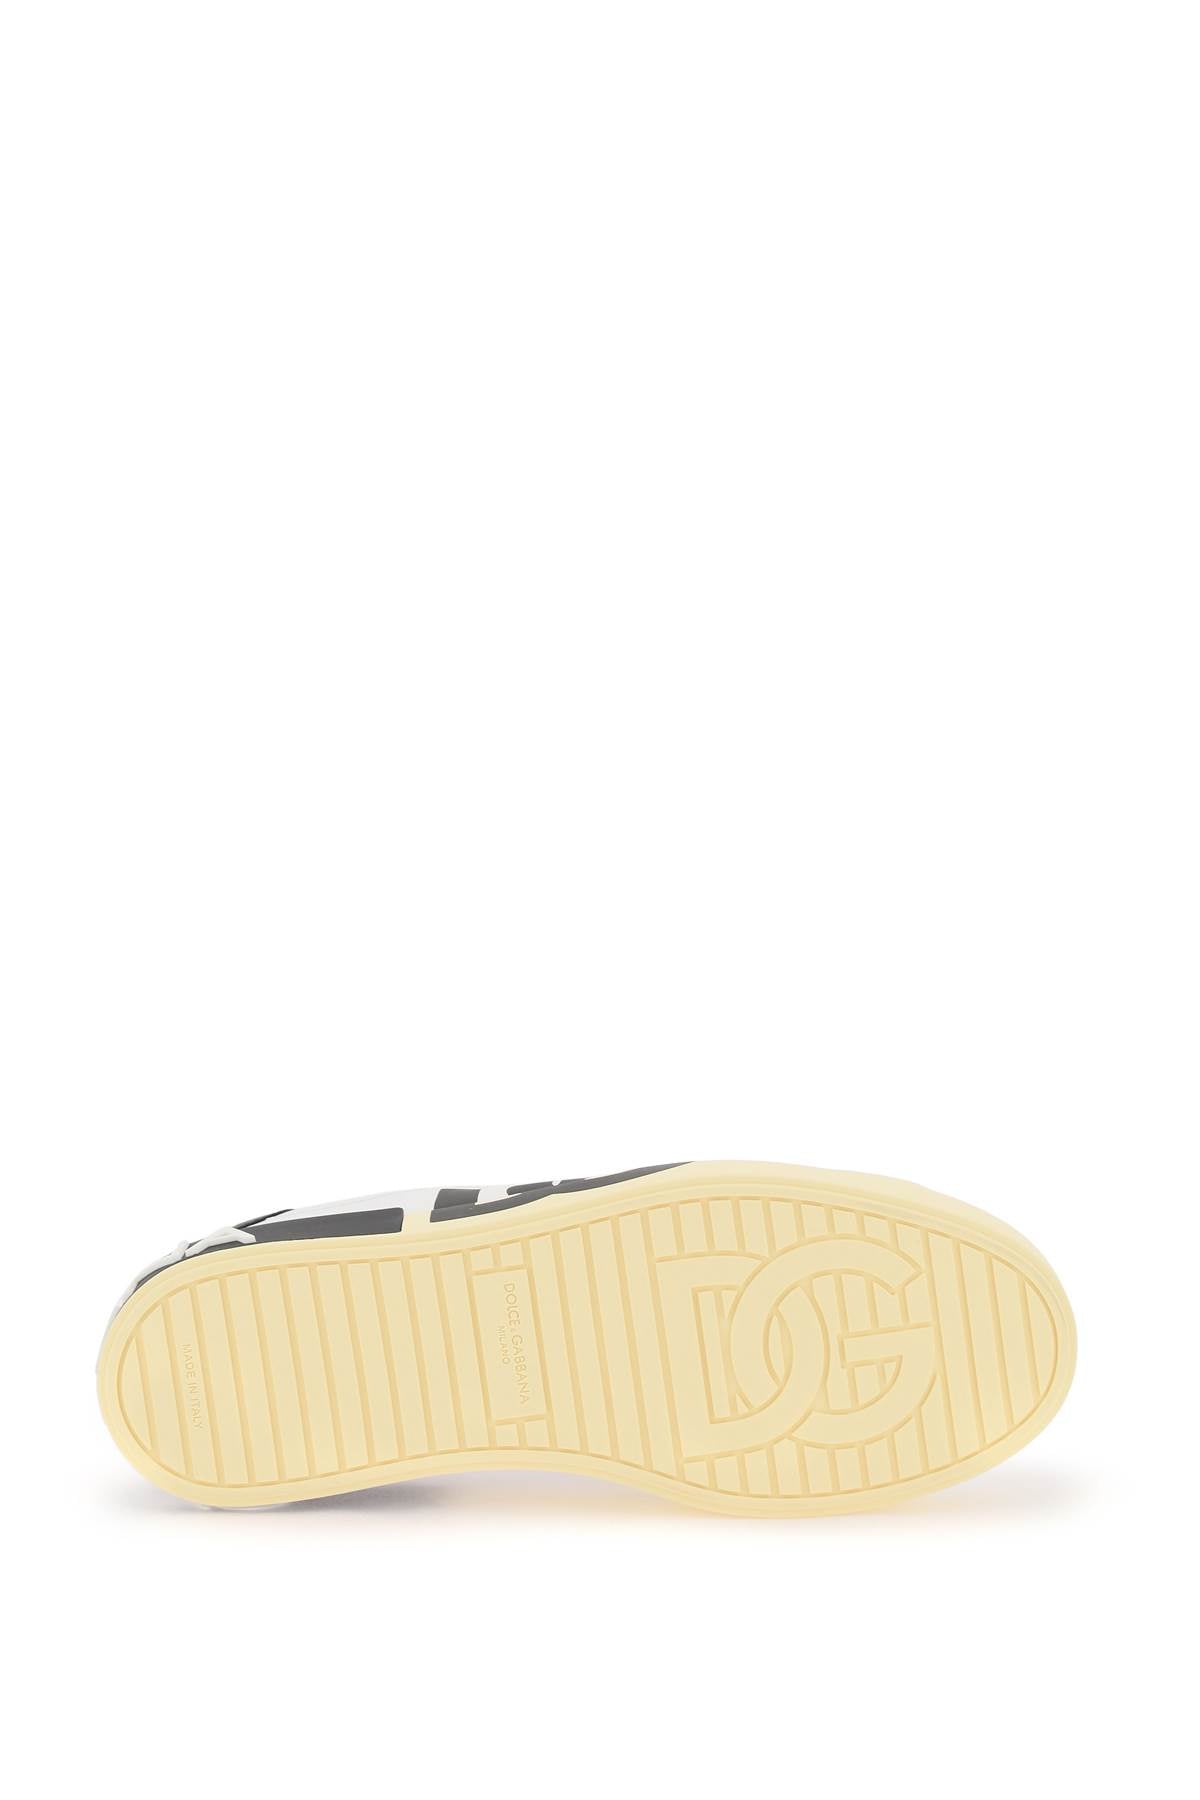 Shop Dolce & Gabbana Leather Portofino Sneakers With Dg Logo In White, Black